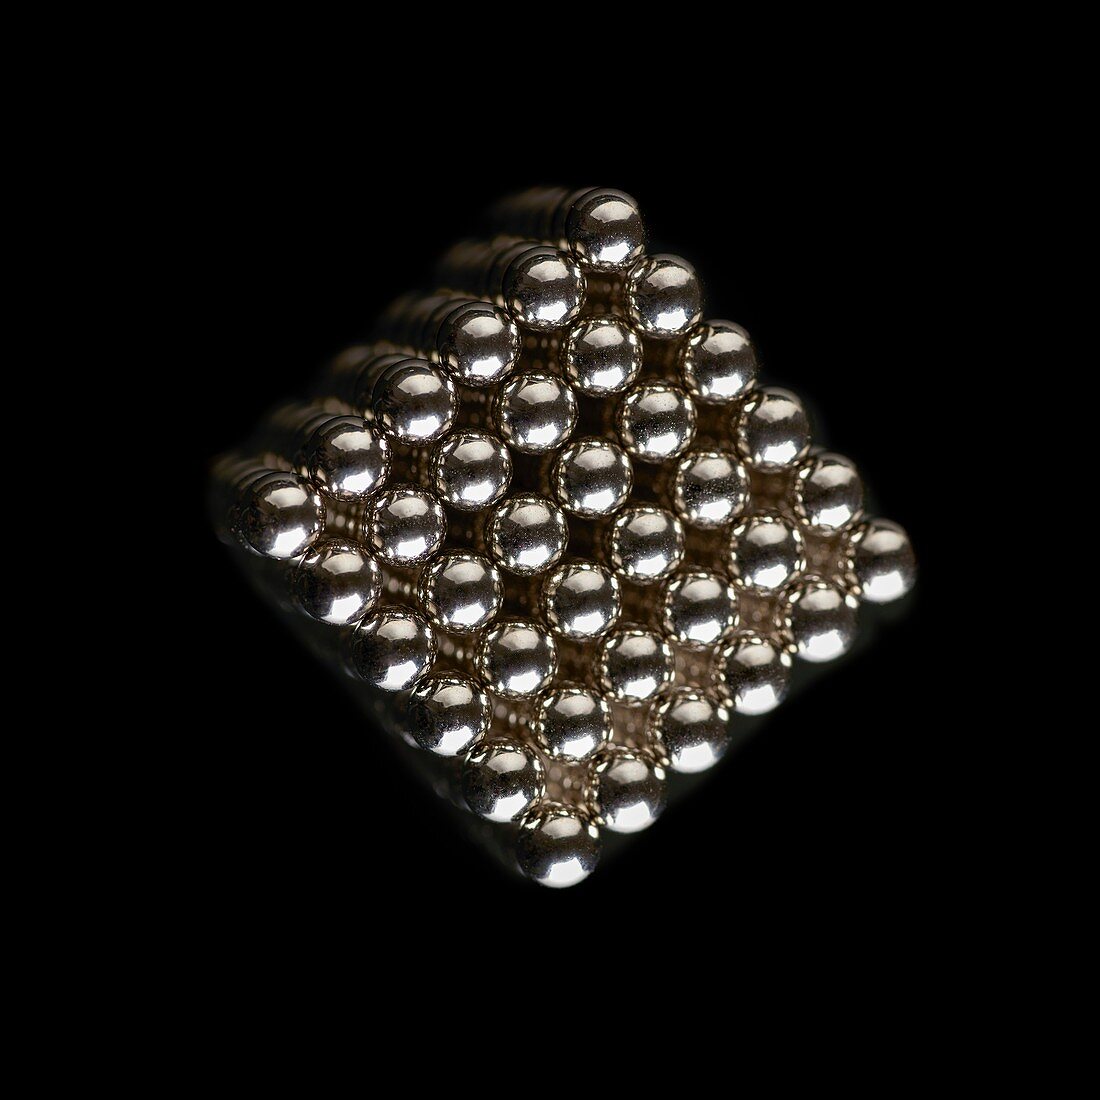 Cube of neodymium magnets